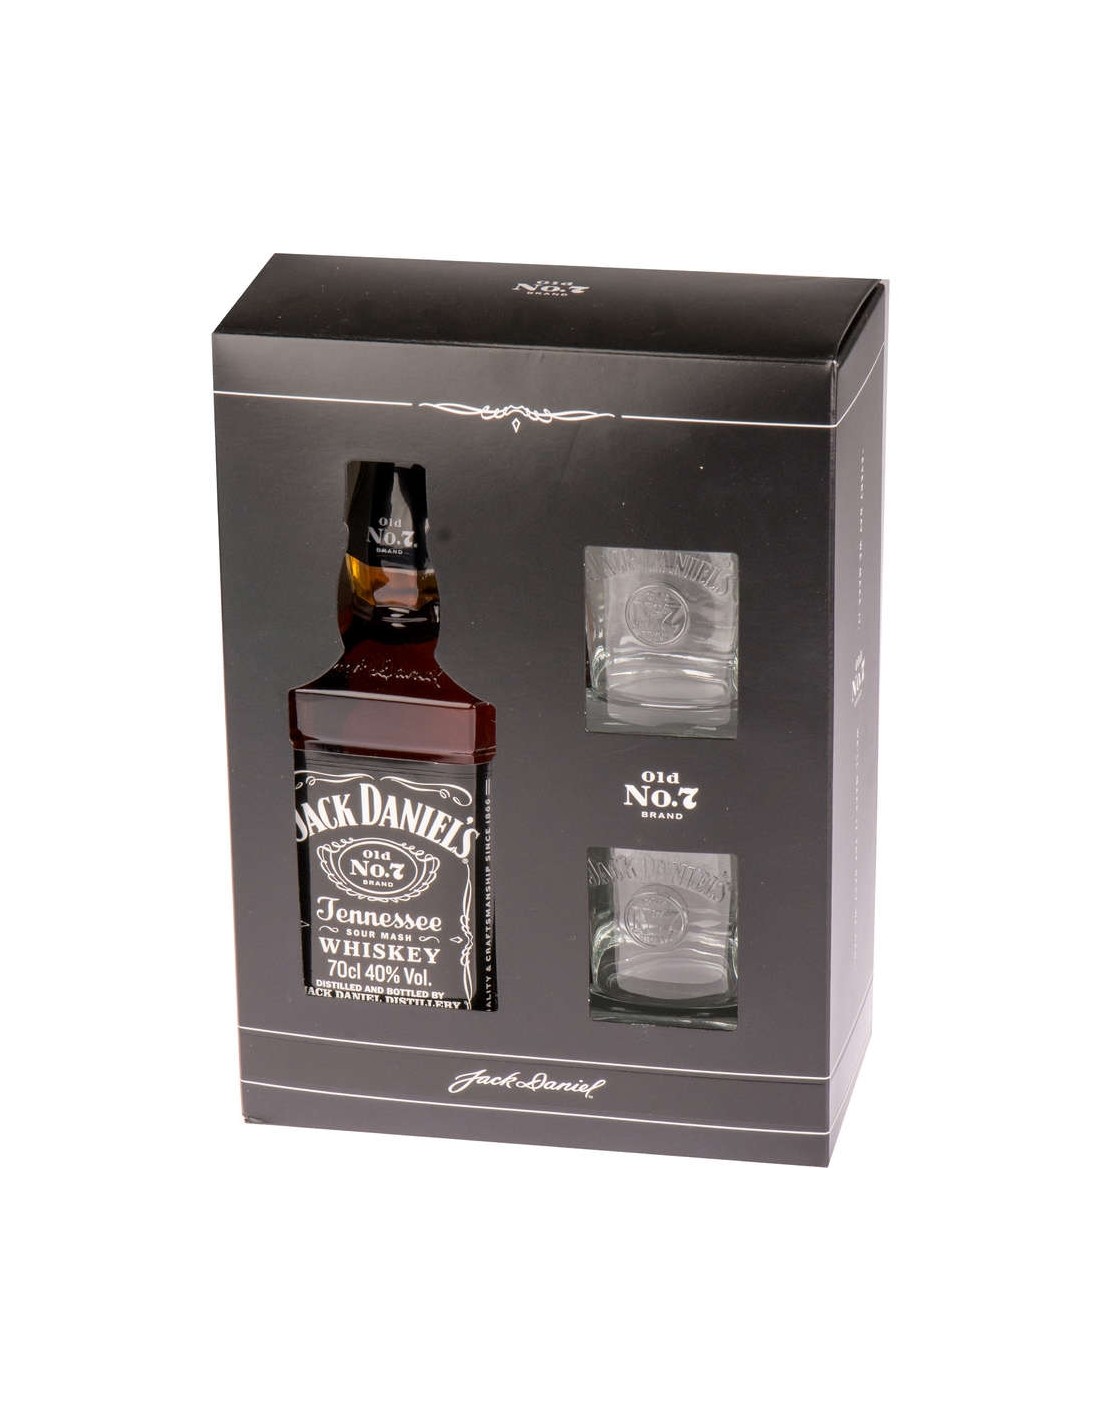 Whisky Jack Daniel’s + 2 Pahare 0.7L, 40% alc., SUA alcooldiscount.ro